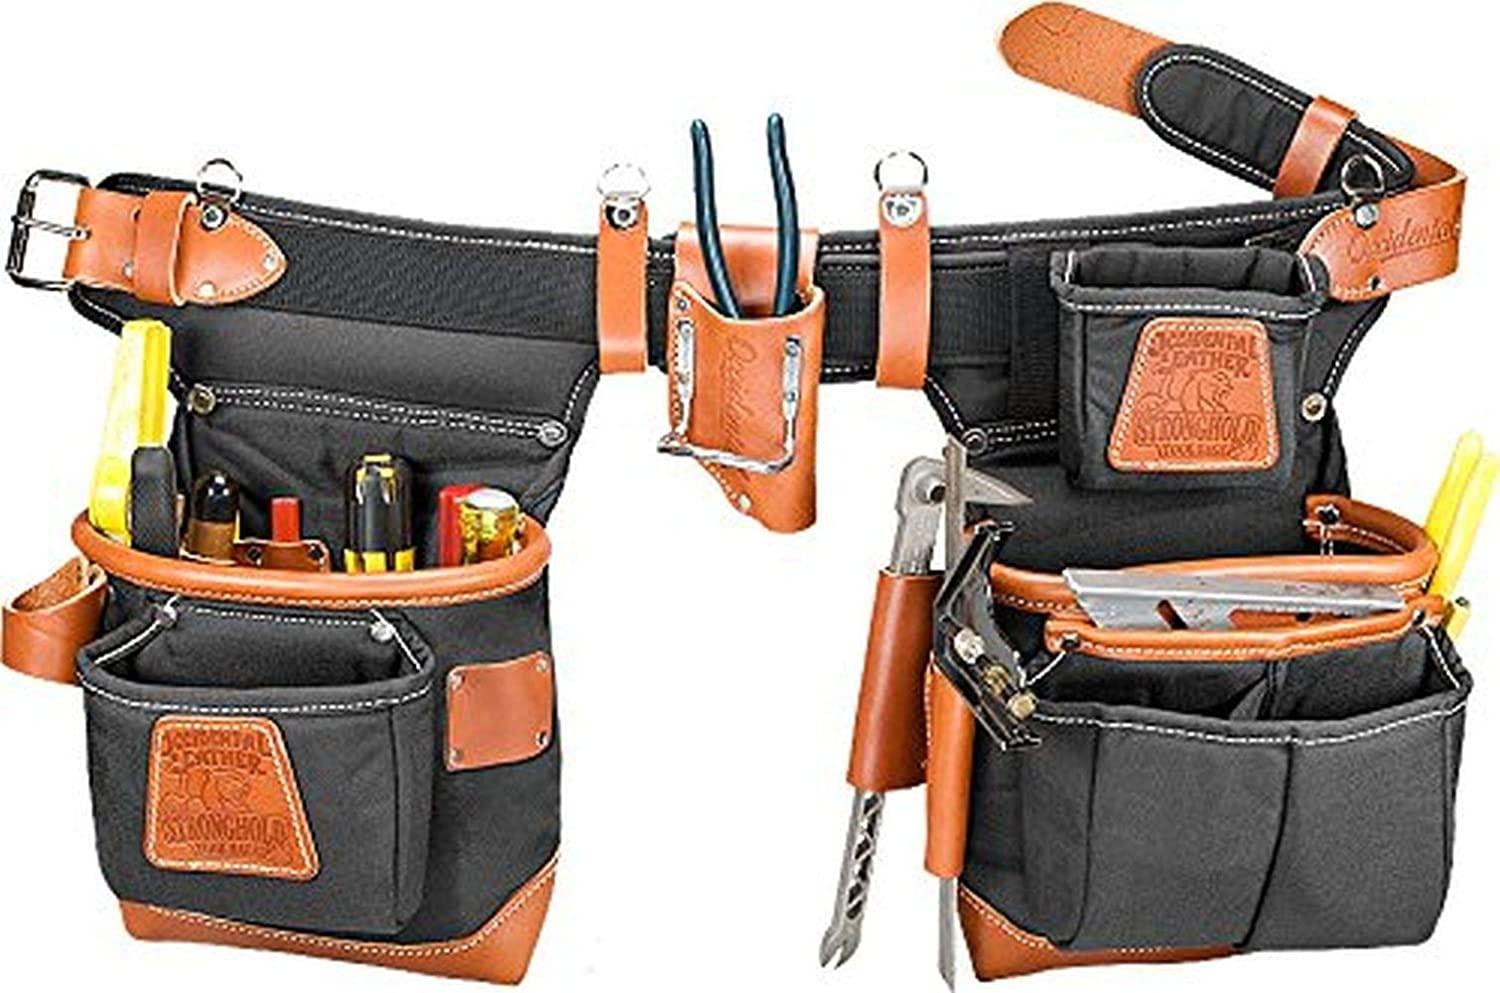 A black Occidental Leather 9850LH Adjust-to-Fit tool belt with orange leather details.